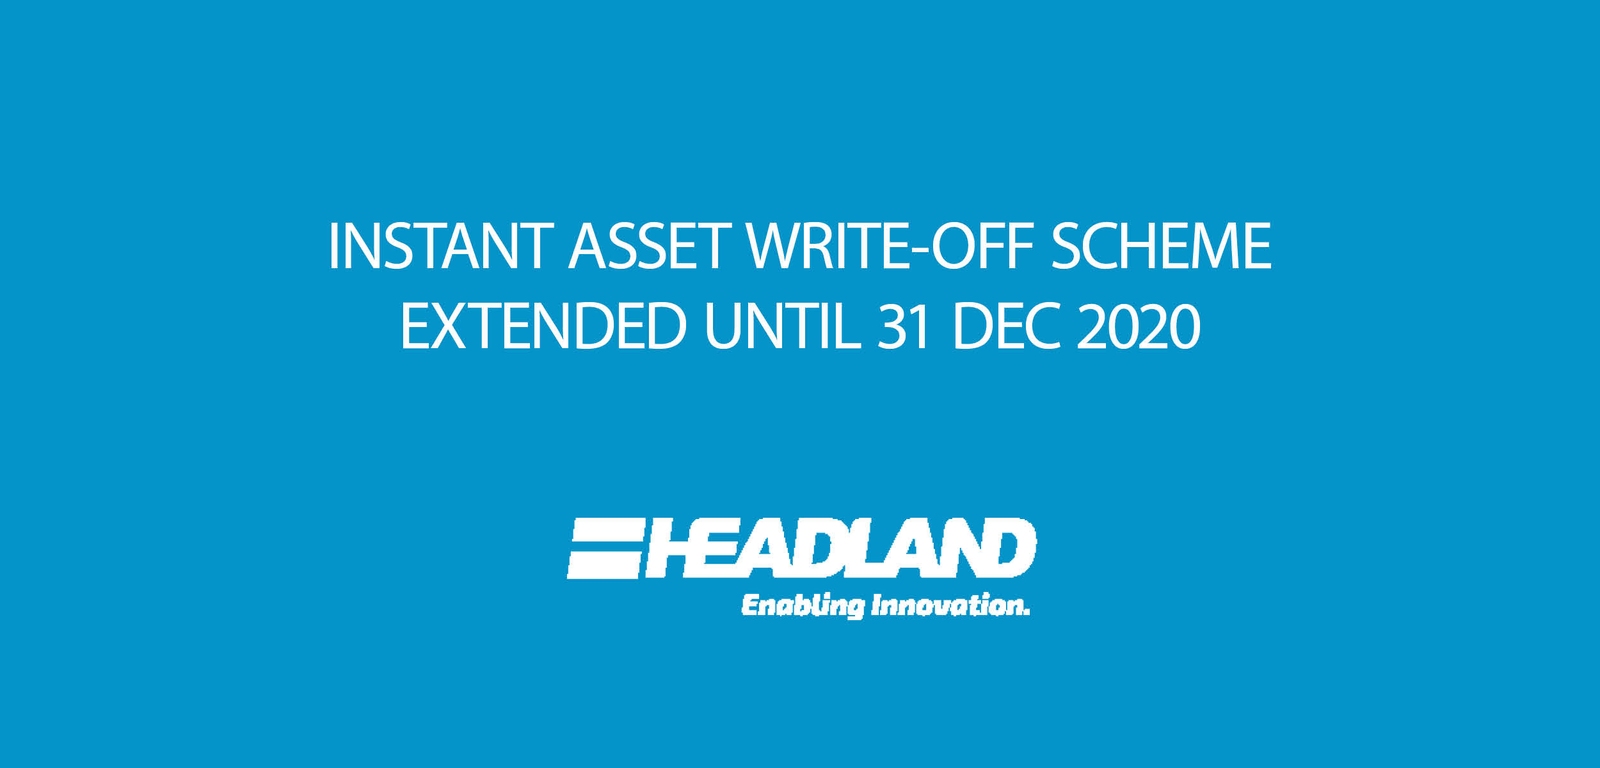 Instant Asset Write-off Scheme of $150,000 is Extended until 31 December 2020